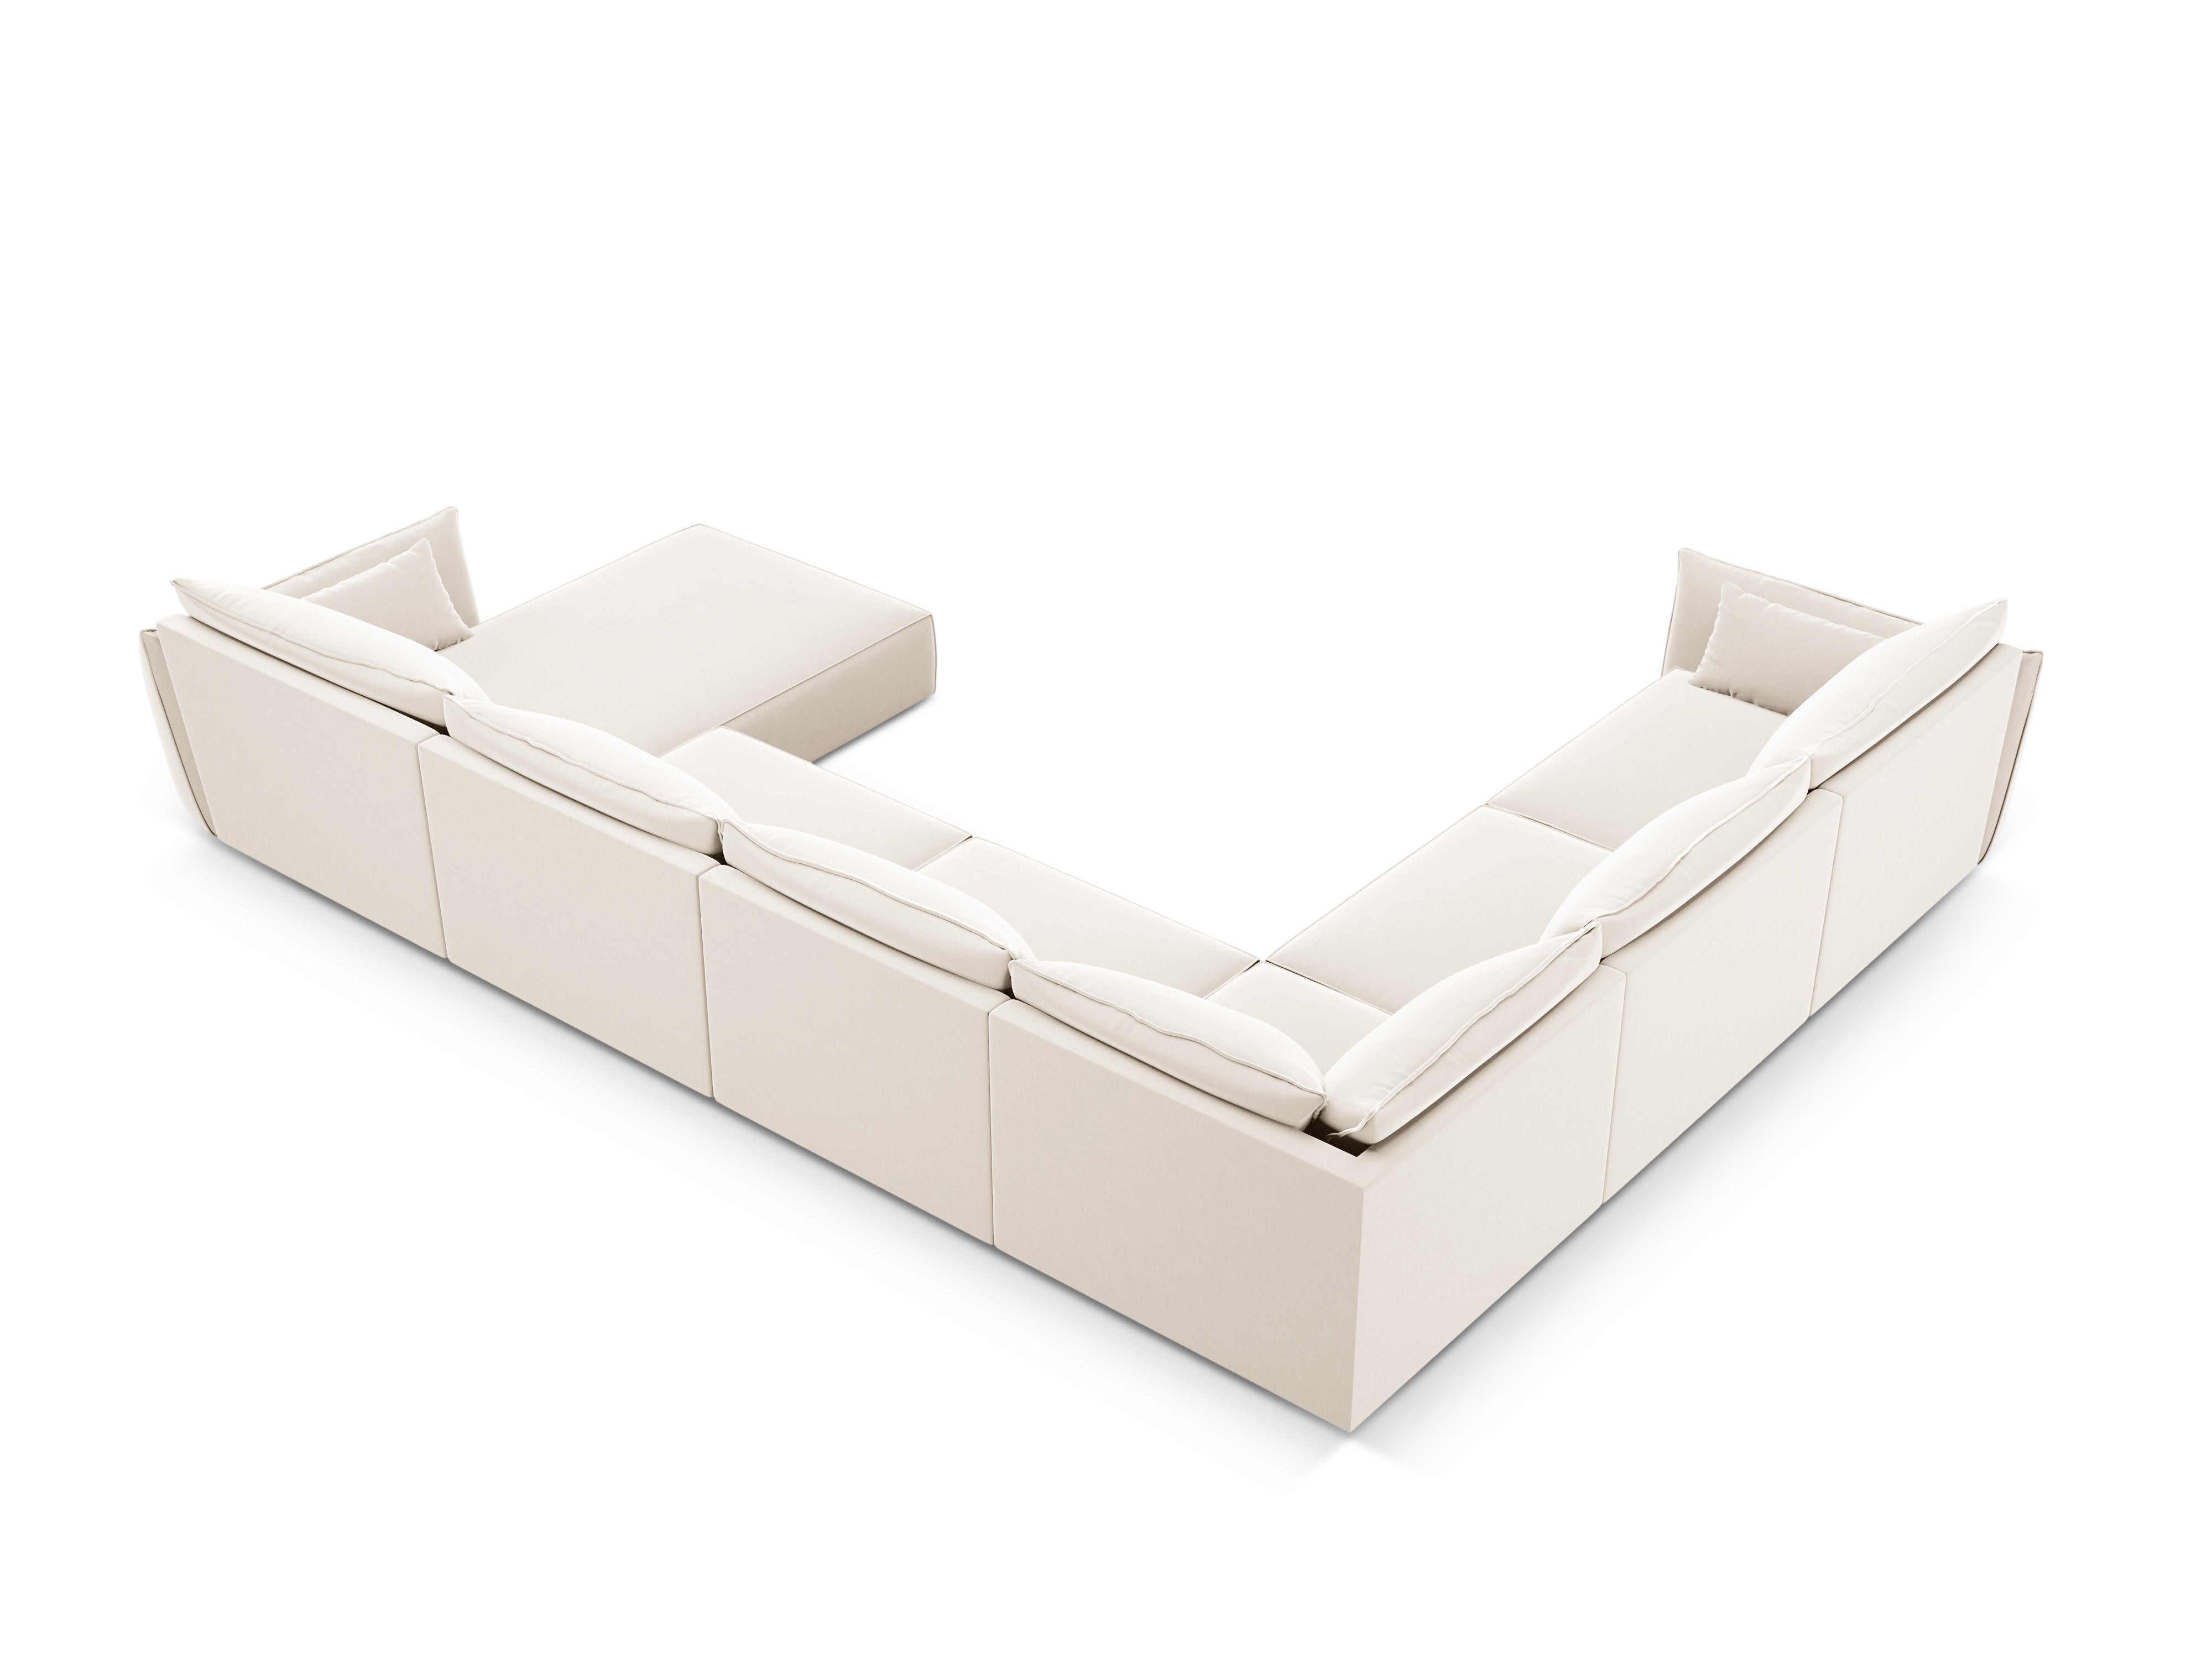 Velvet Panoramic Left Corner Sofa, "Vanda", 8 Seats, 384x284x85
Made in Europe, Mazzini Sofas, Eye on Design